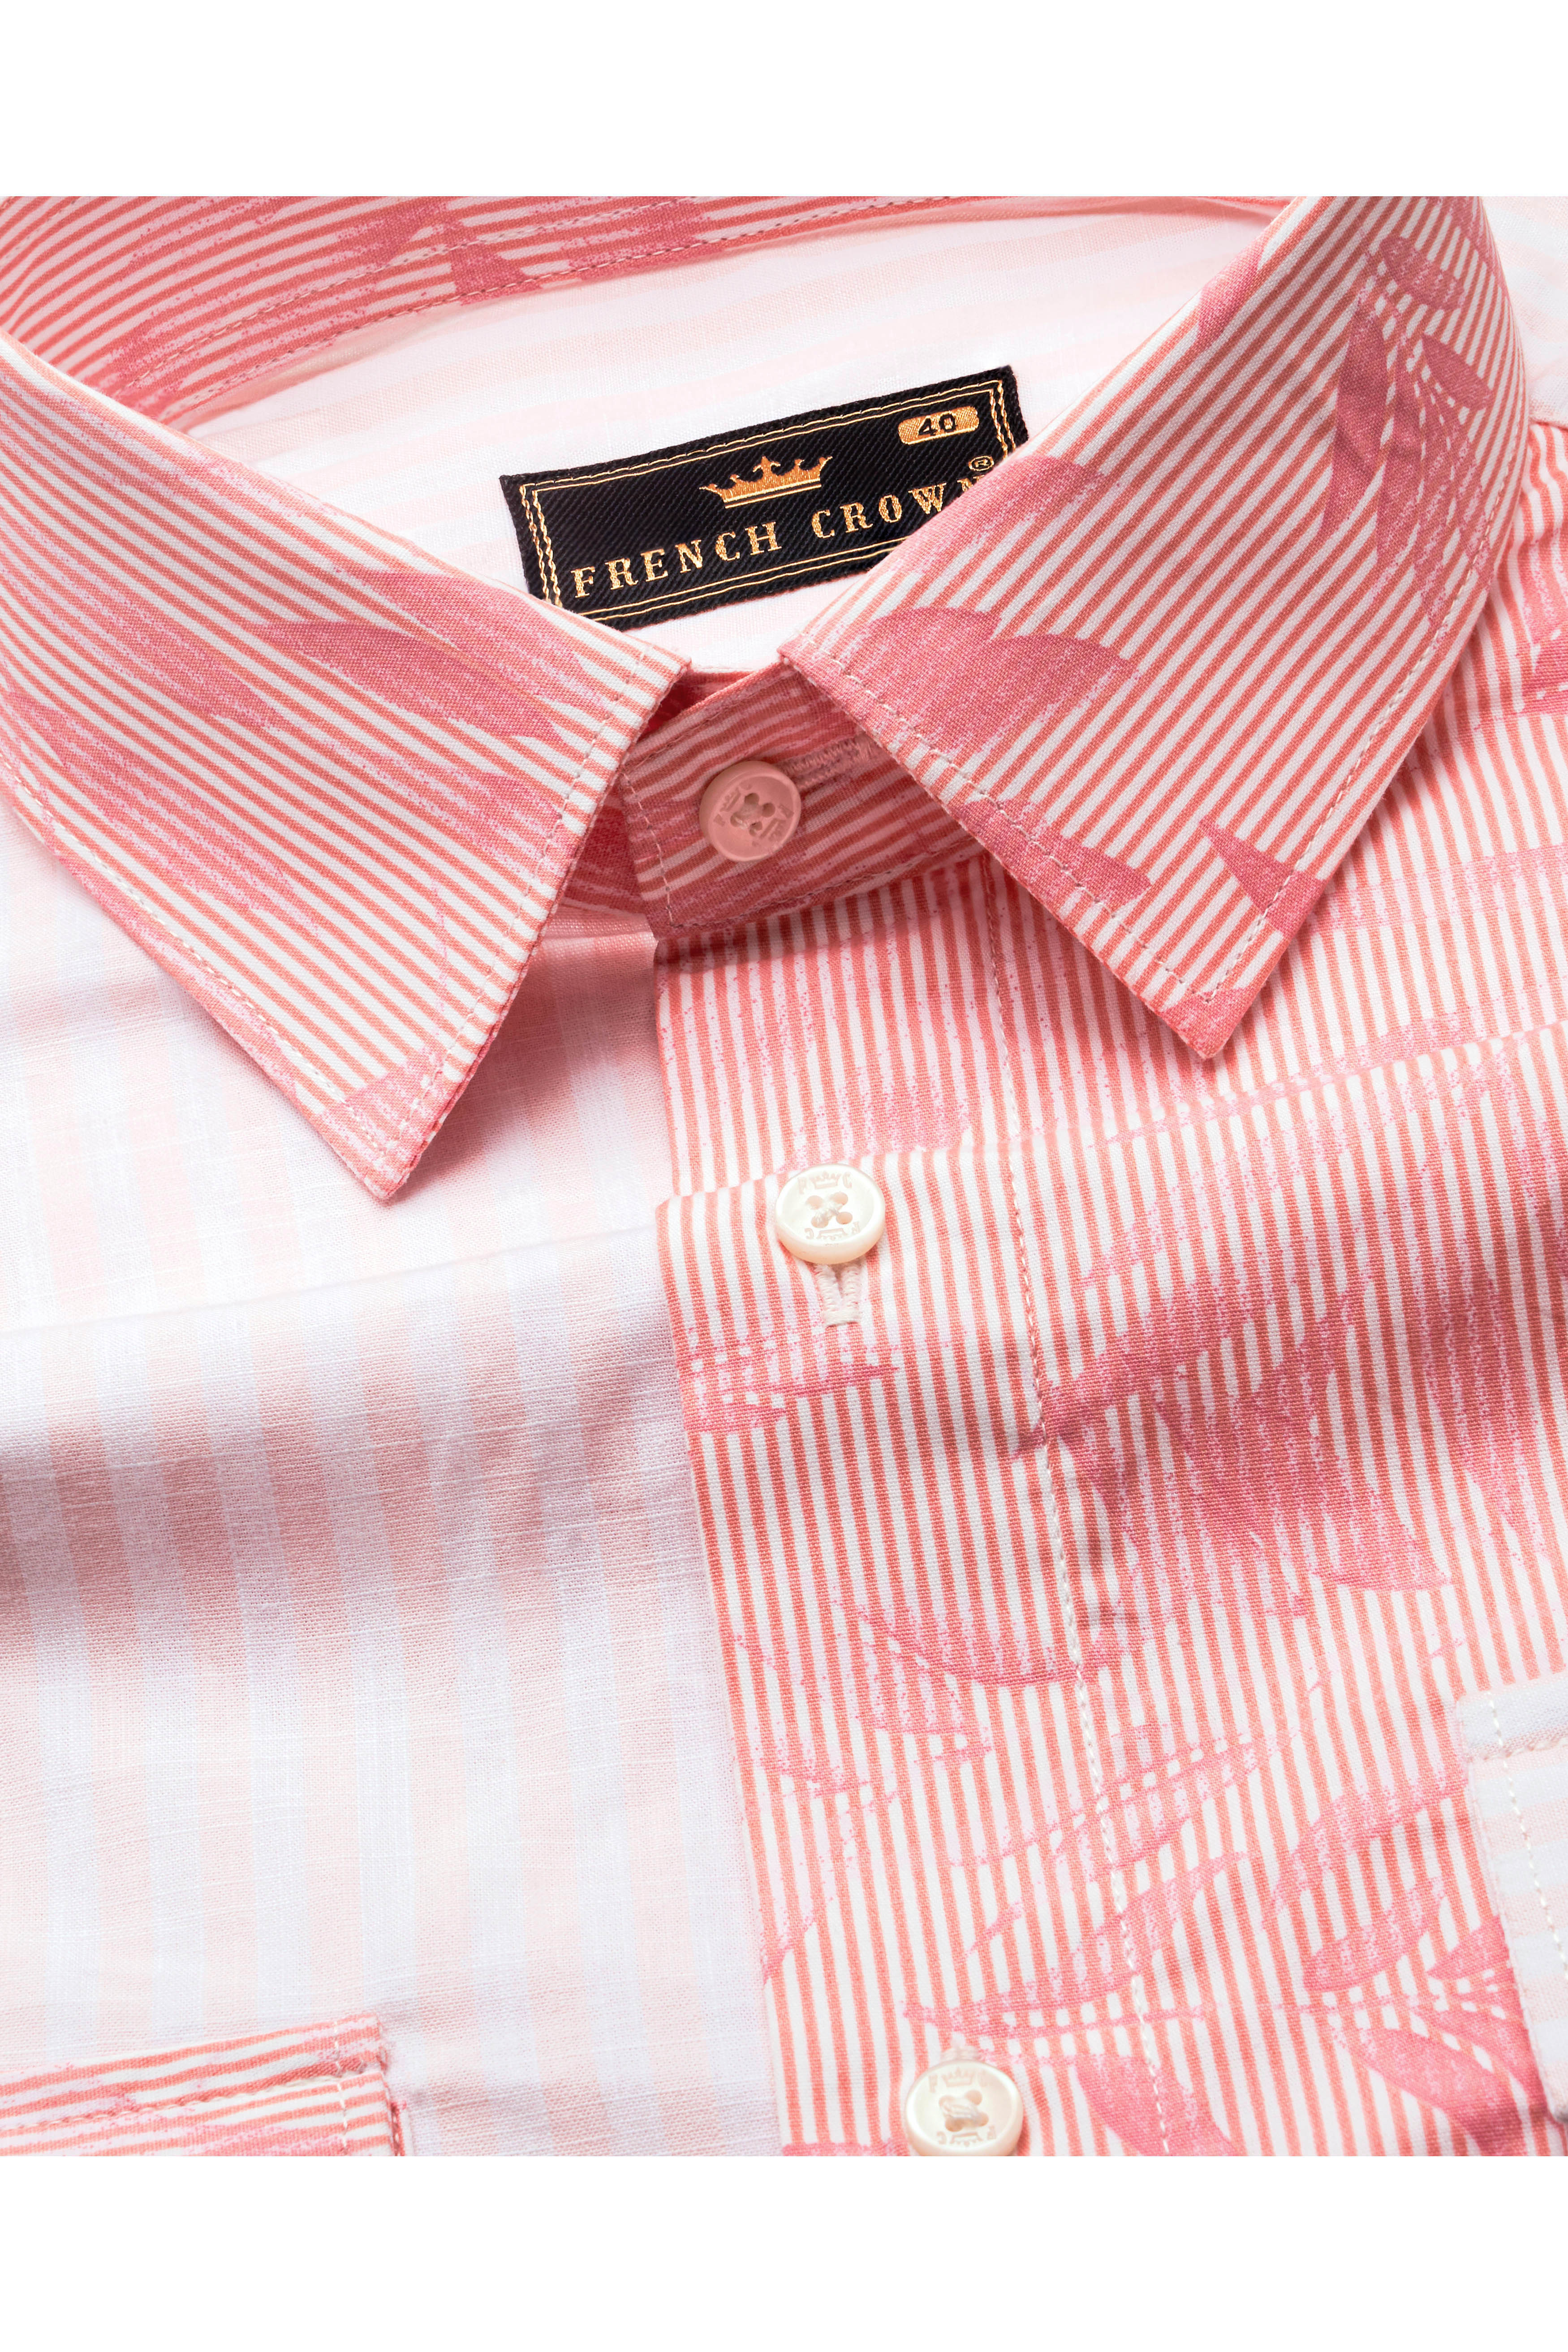 Salmon Peach with Flamingo Bird Embroidered Premium Cotton Designer Shirt